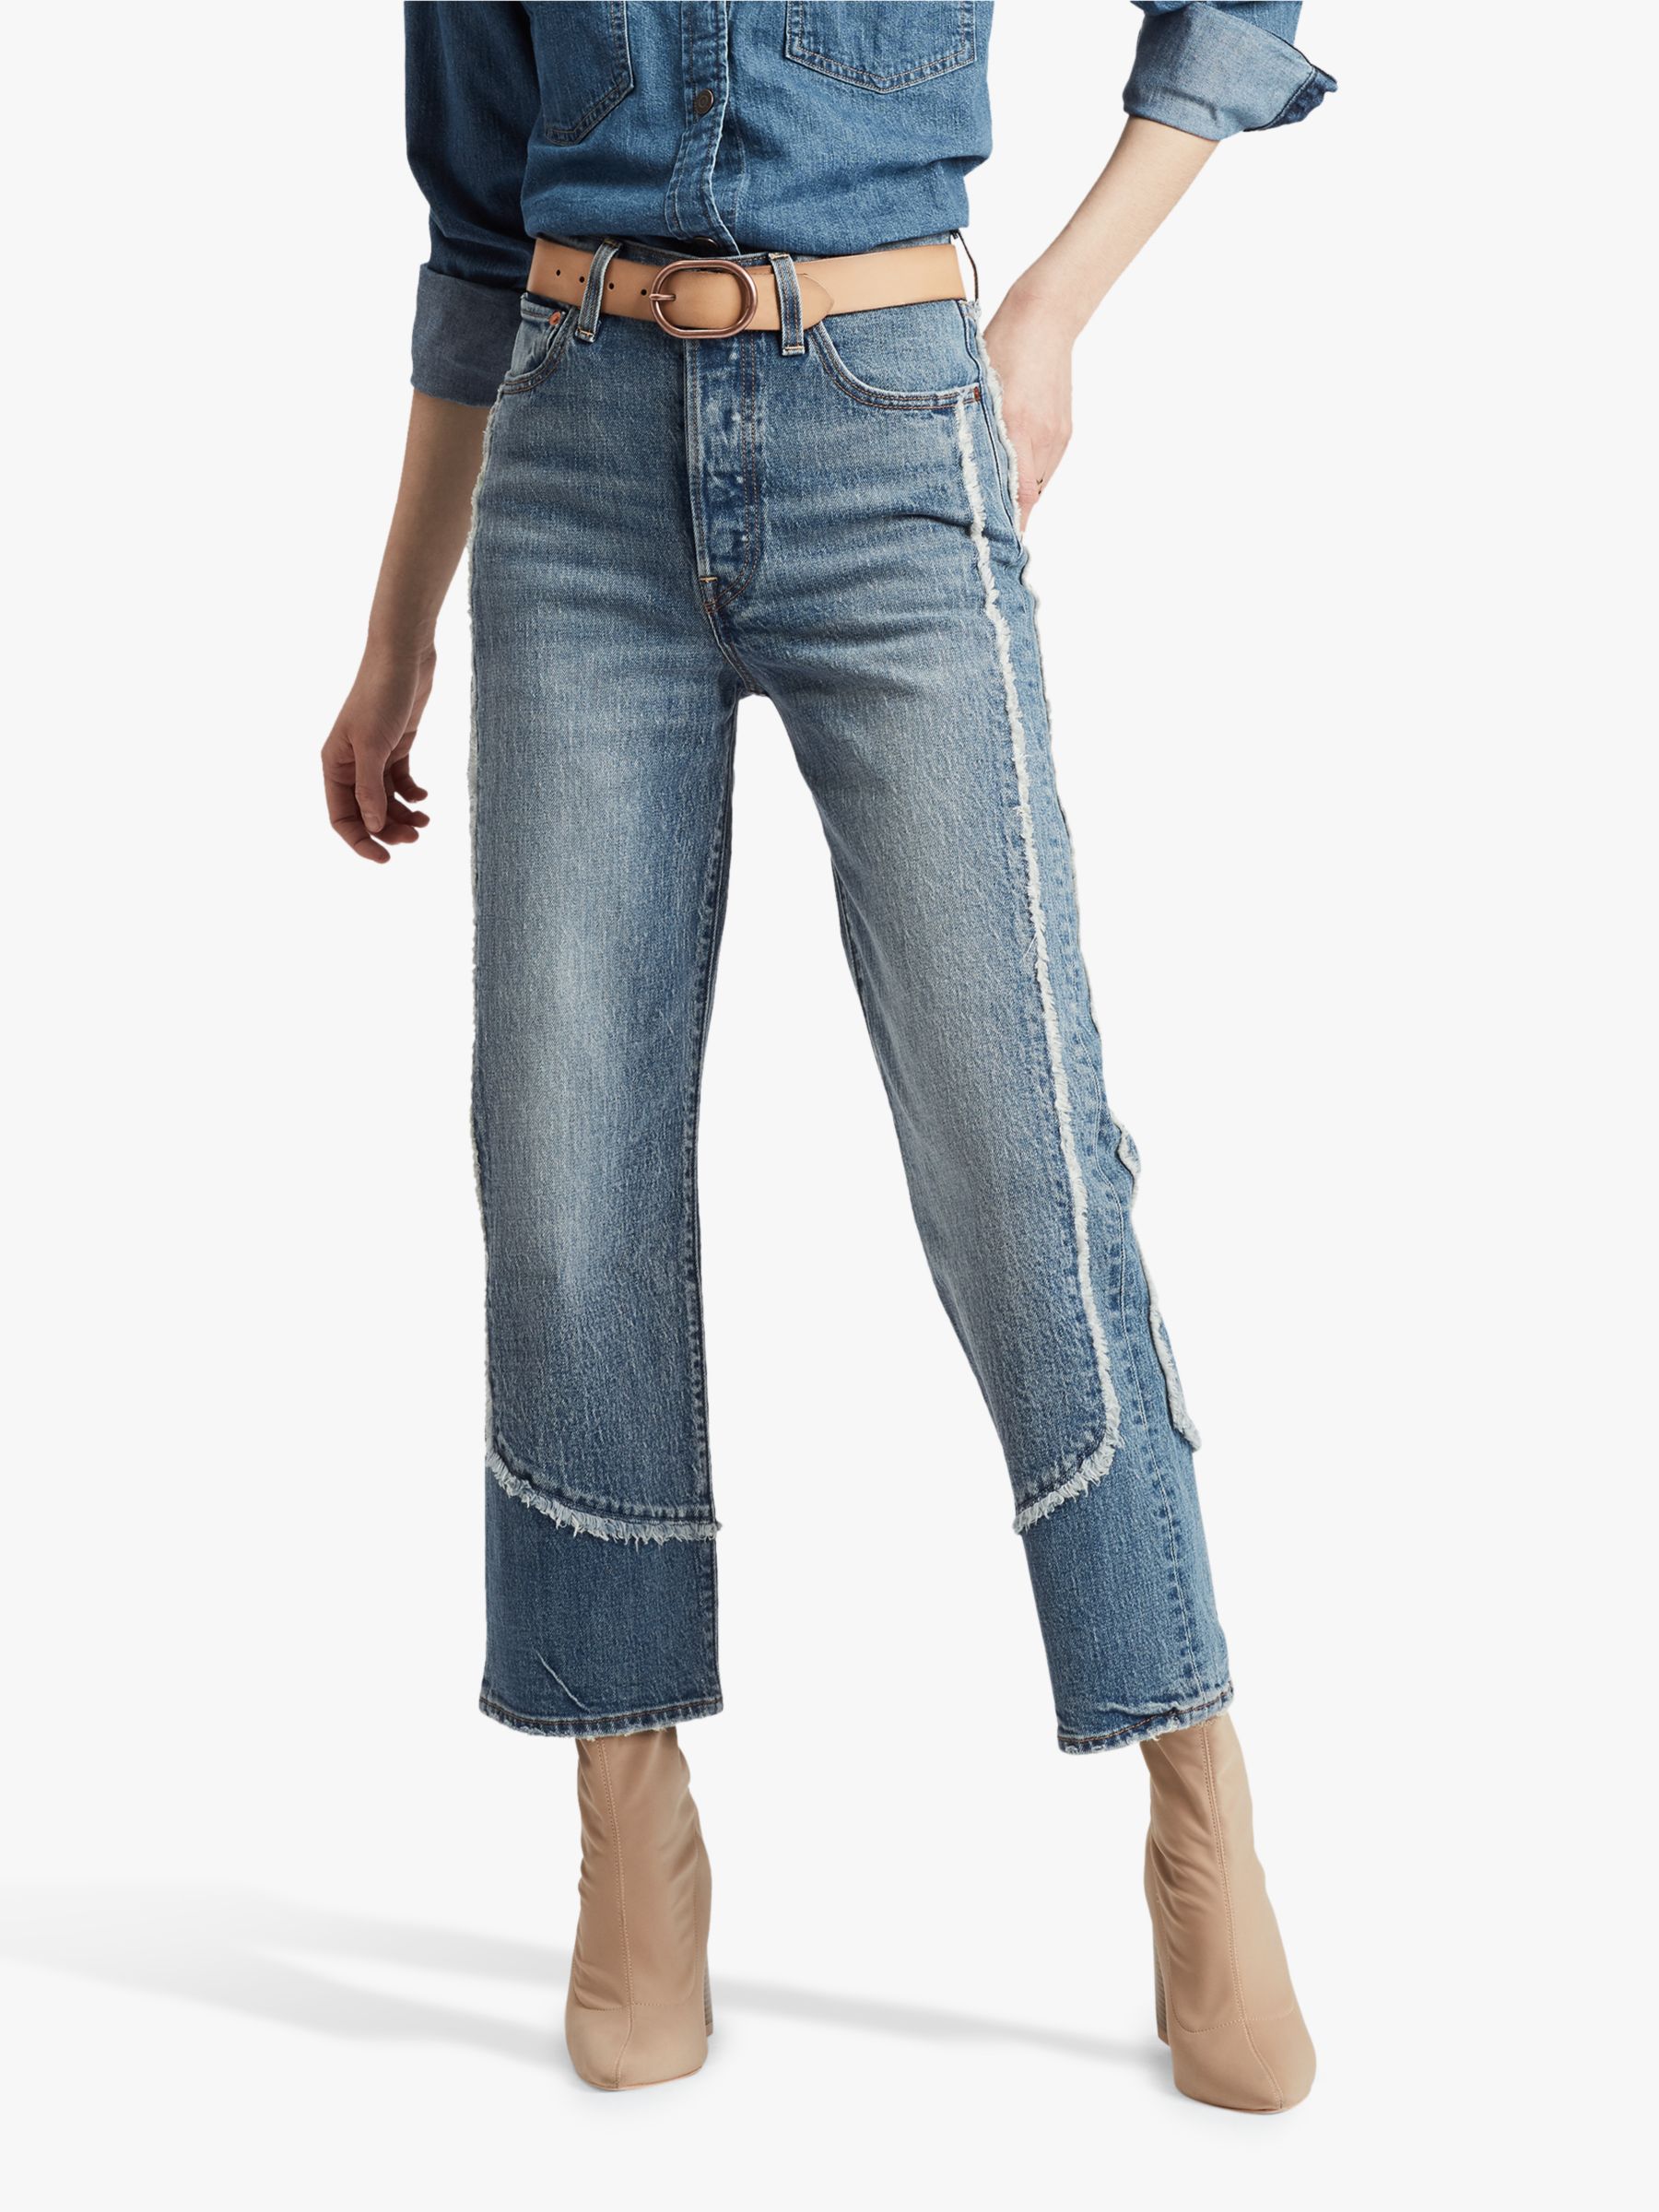 levis fringe jeans